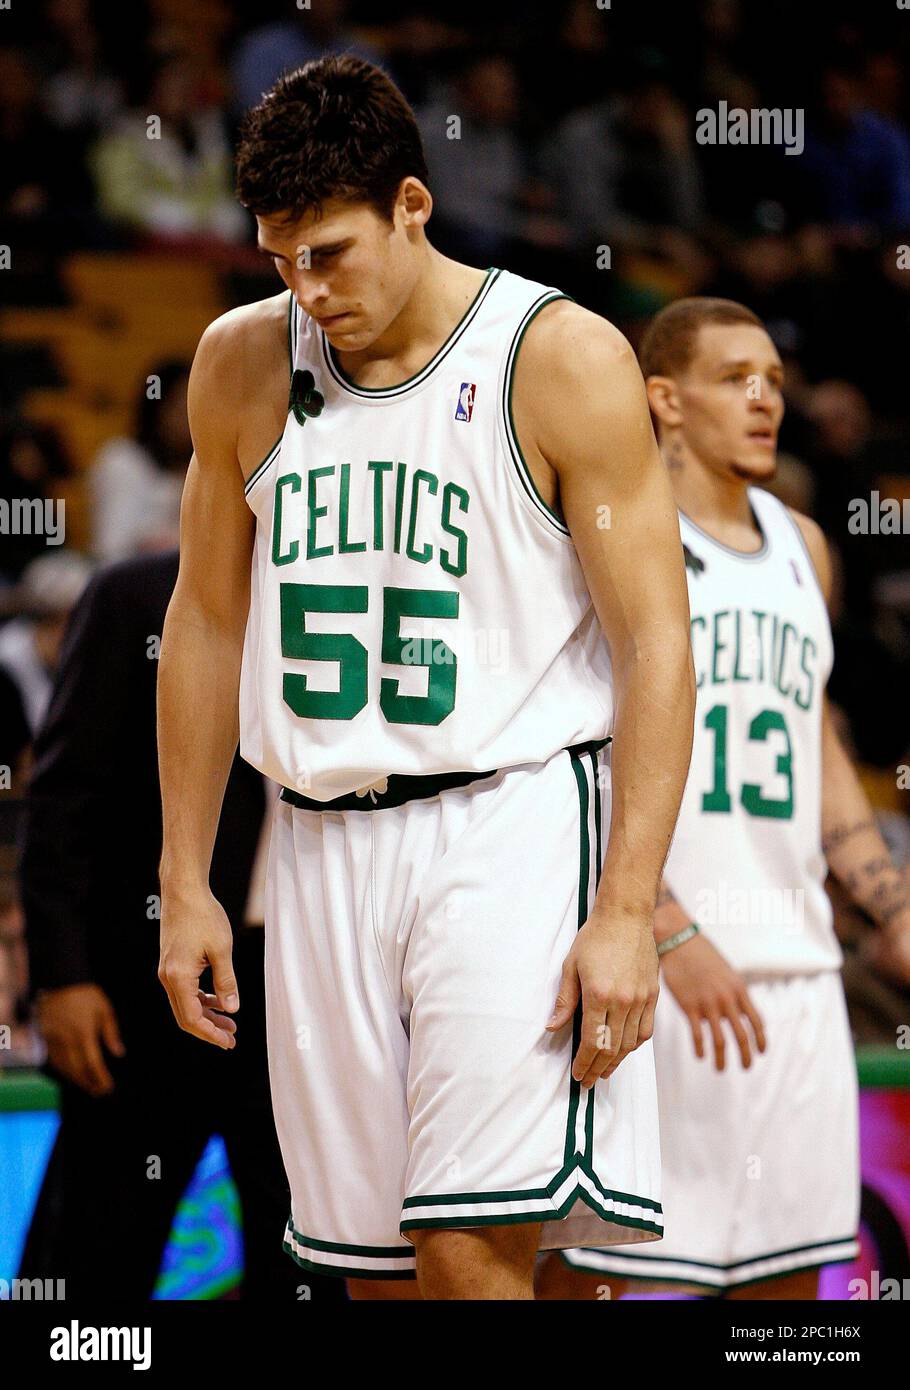 Boston Celtics Uniform 2 pc. - NBA - Basketball